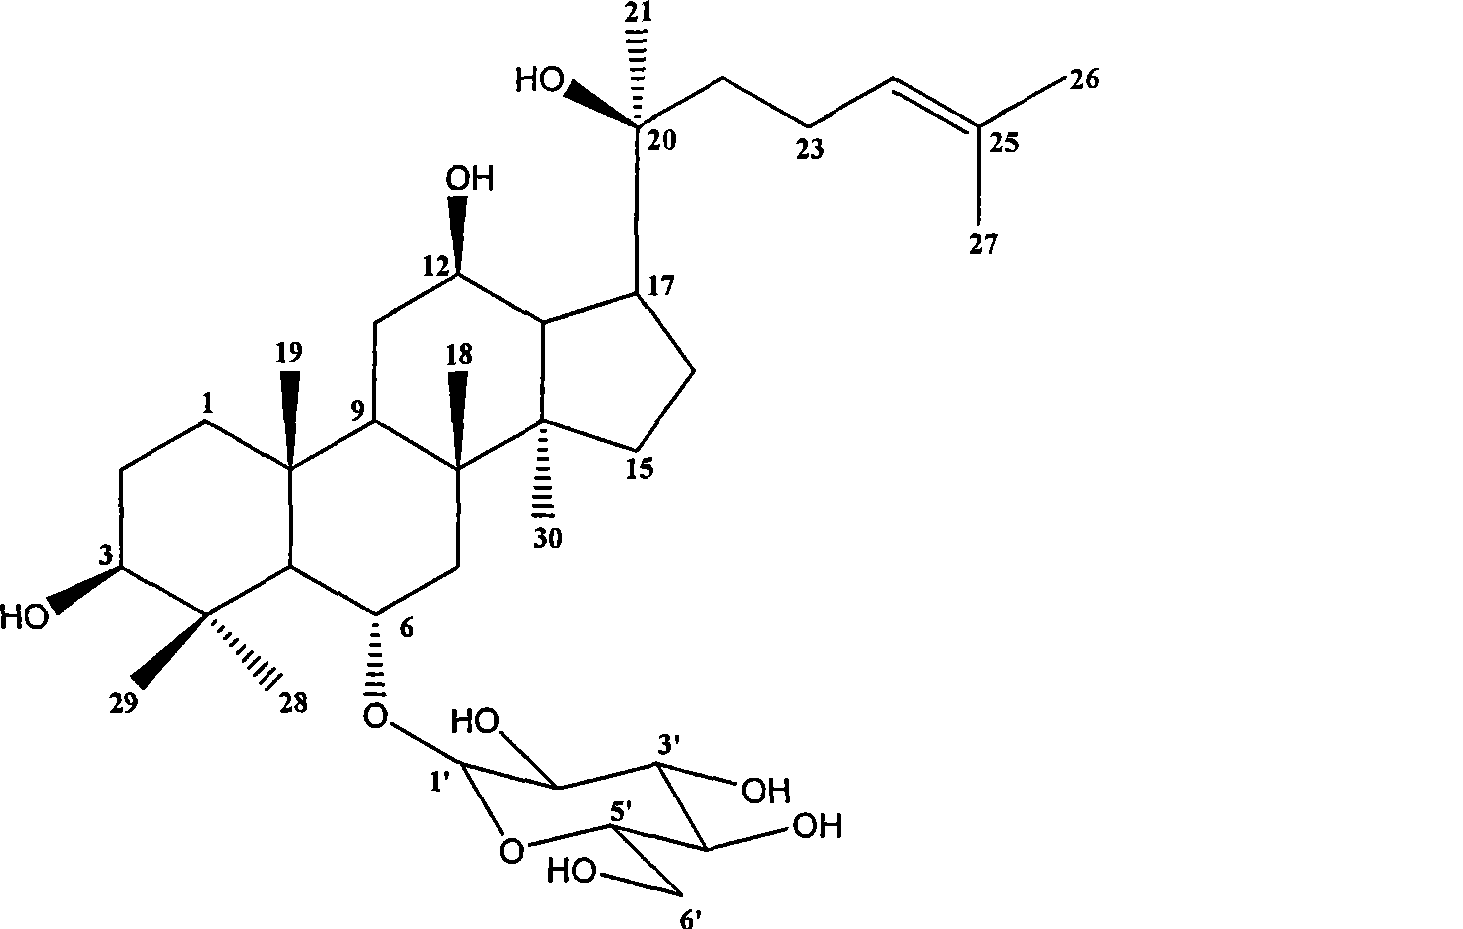 Process of preparing 20(S)-ginsenoside Rh1 with streptomycete fermentation of pseudo-ginseng saponin